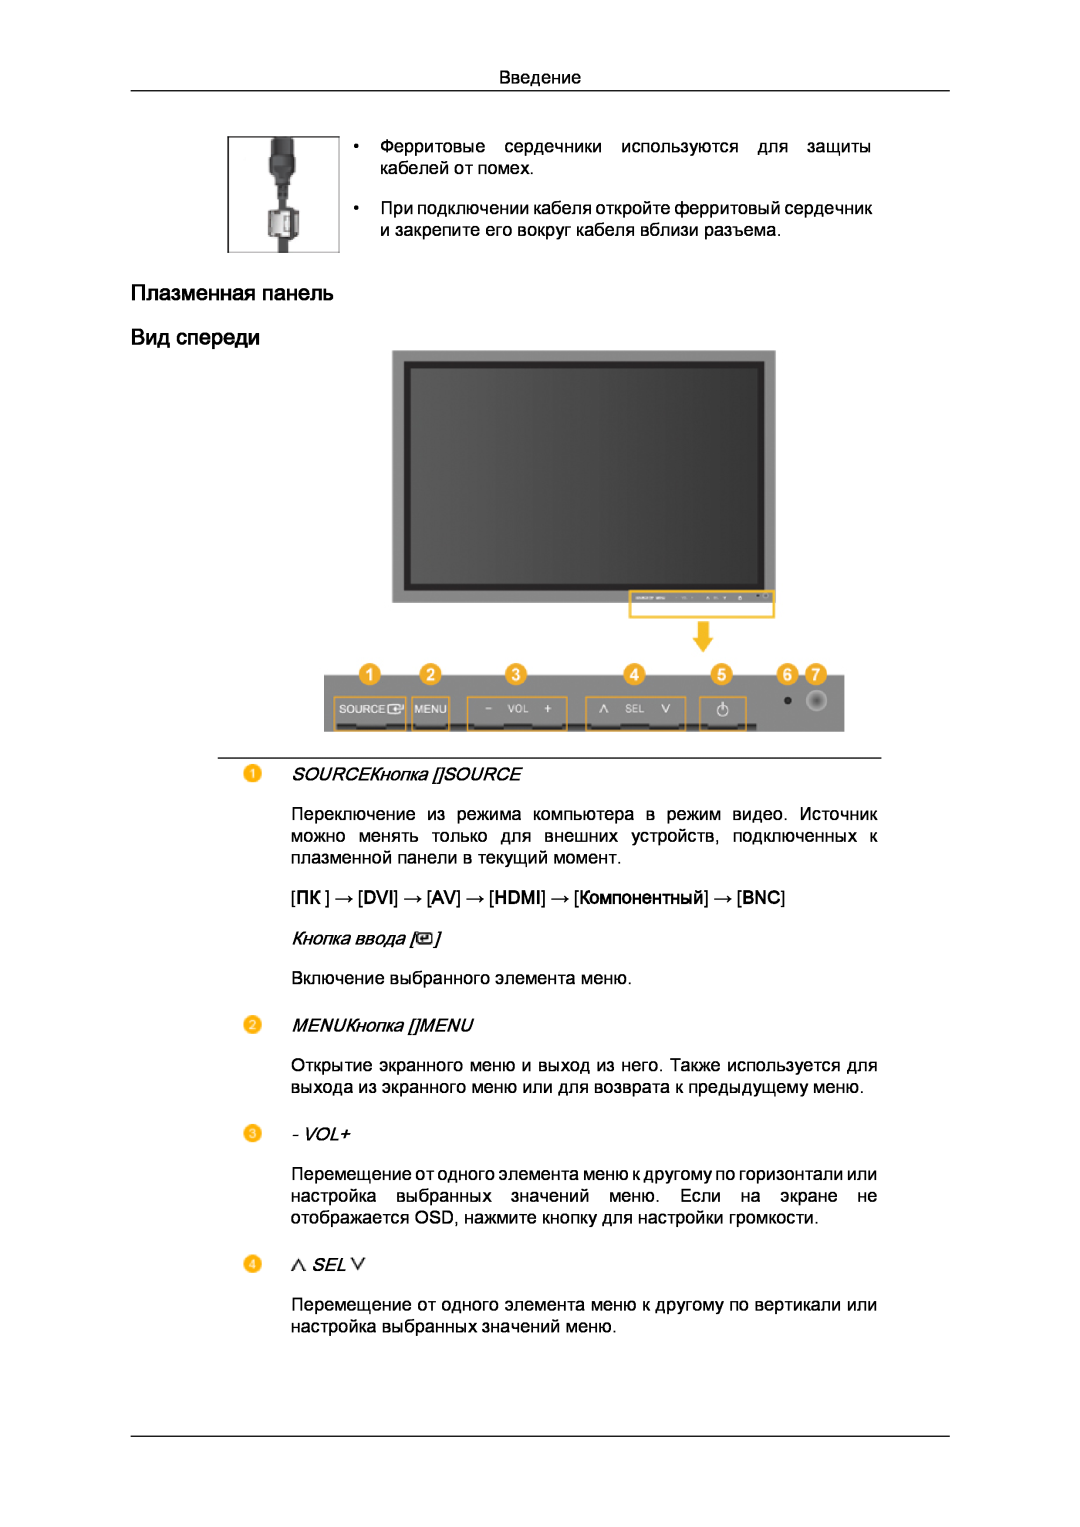 Samsung PH63KPFLBF/EN, PH50KPPLBF/EN manual ПК → DVI → AV → HDMI → Компонентный → BNC, Плазменная панель Вид спереди 